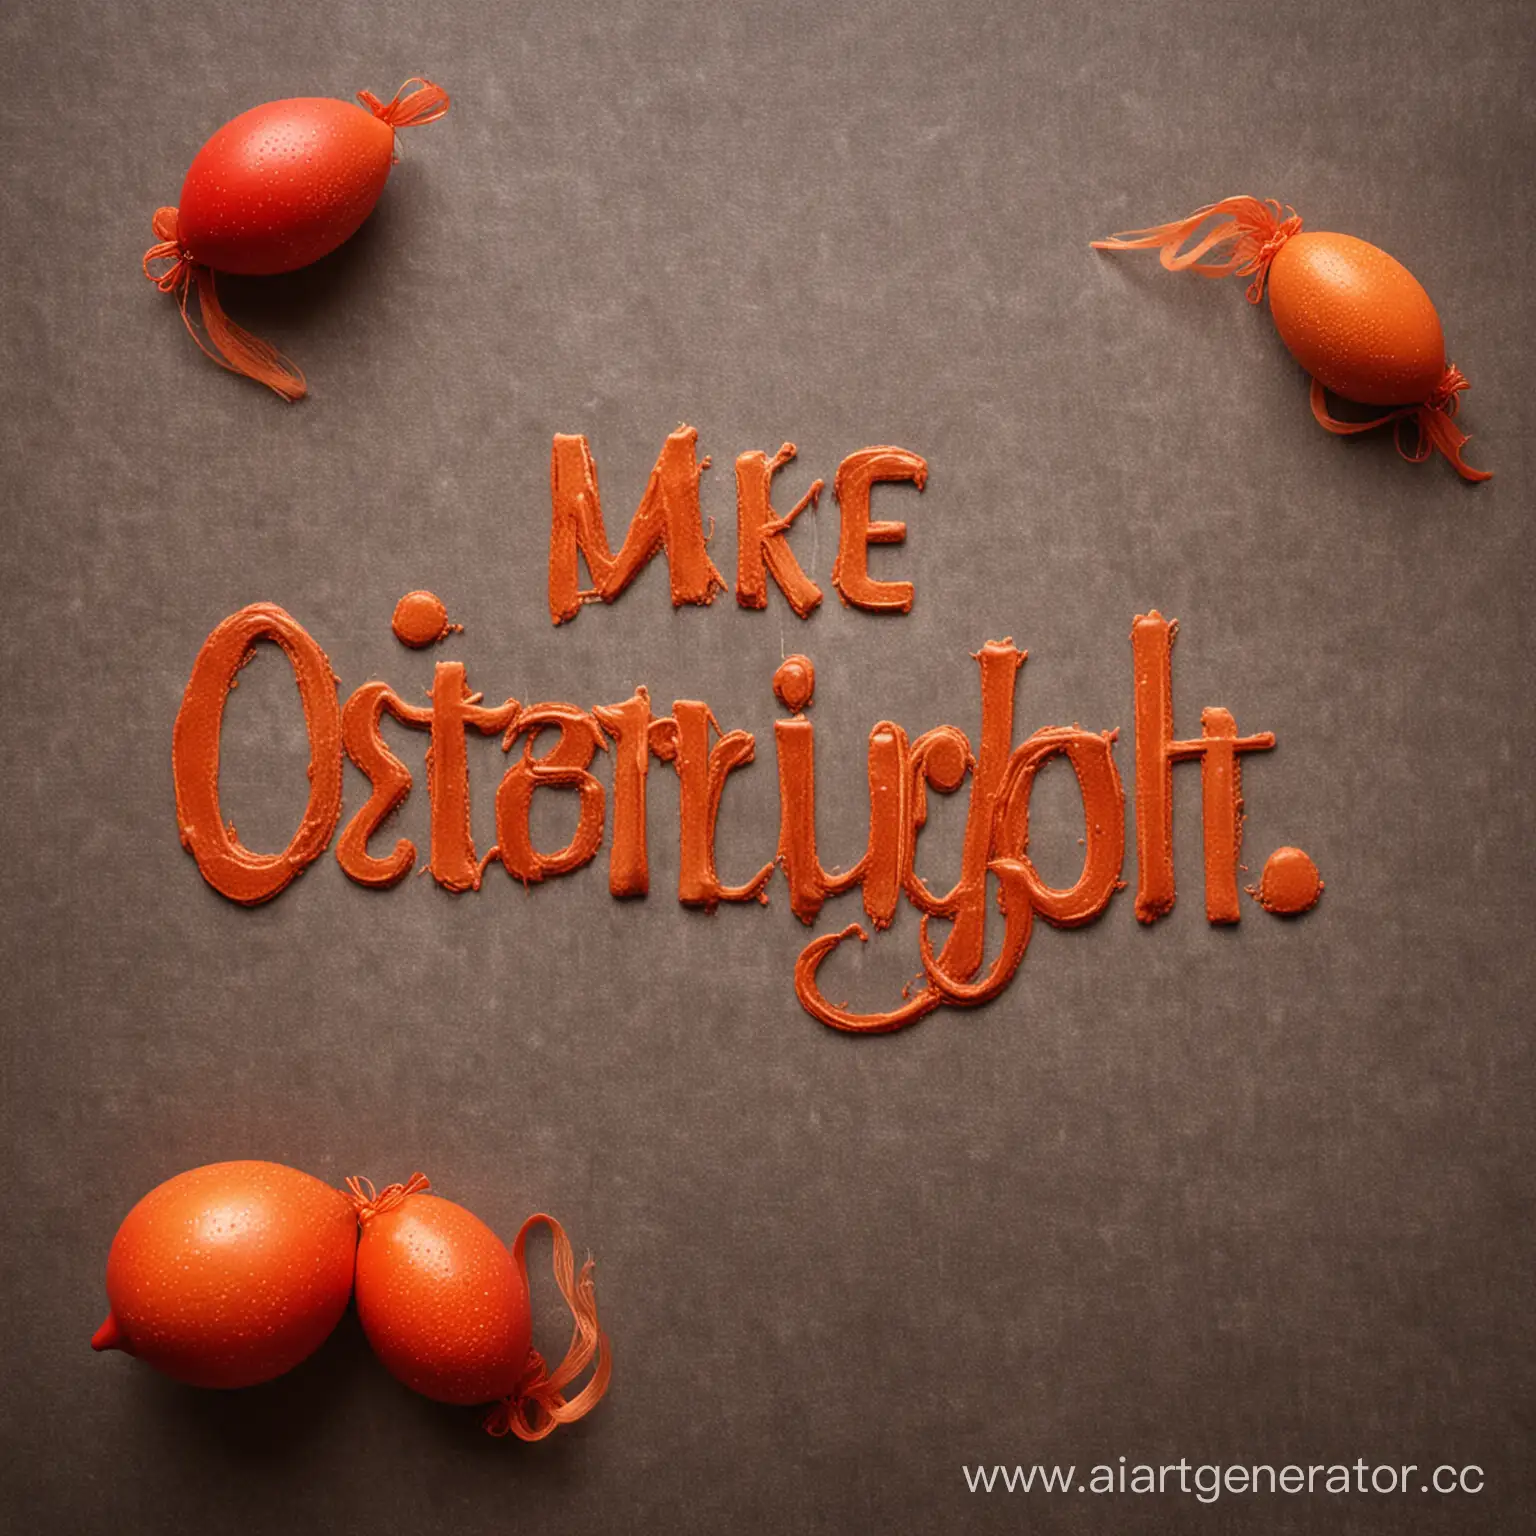 Vibrant-OsterNight-Inscription-in-Red-and-Orange